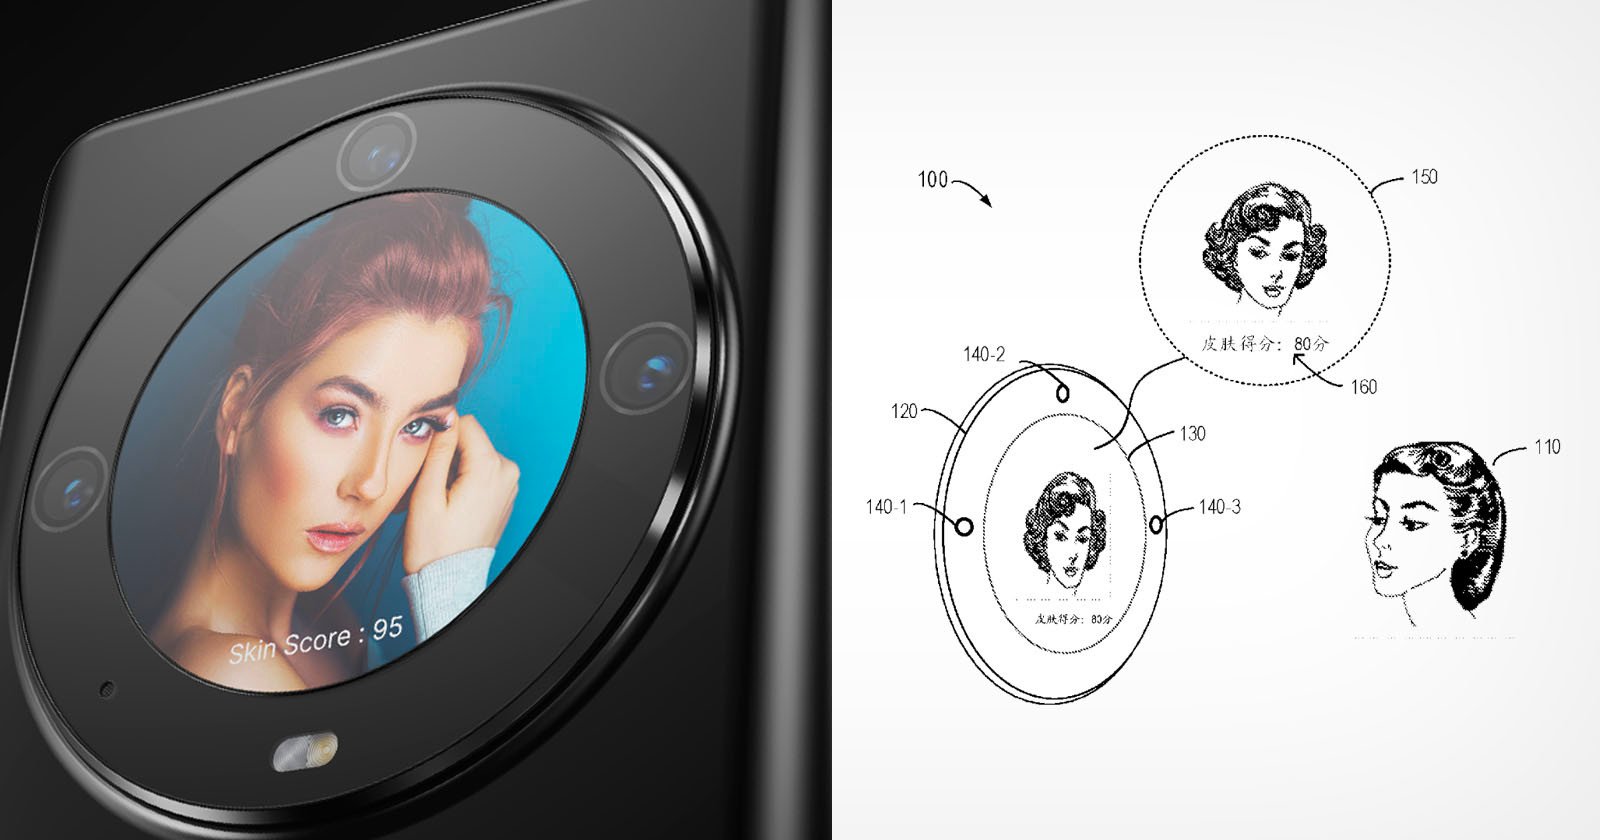 Huawei Designs Face Scanning Camera That Generates a Skin Score